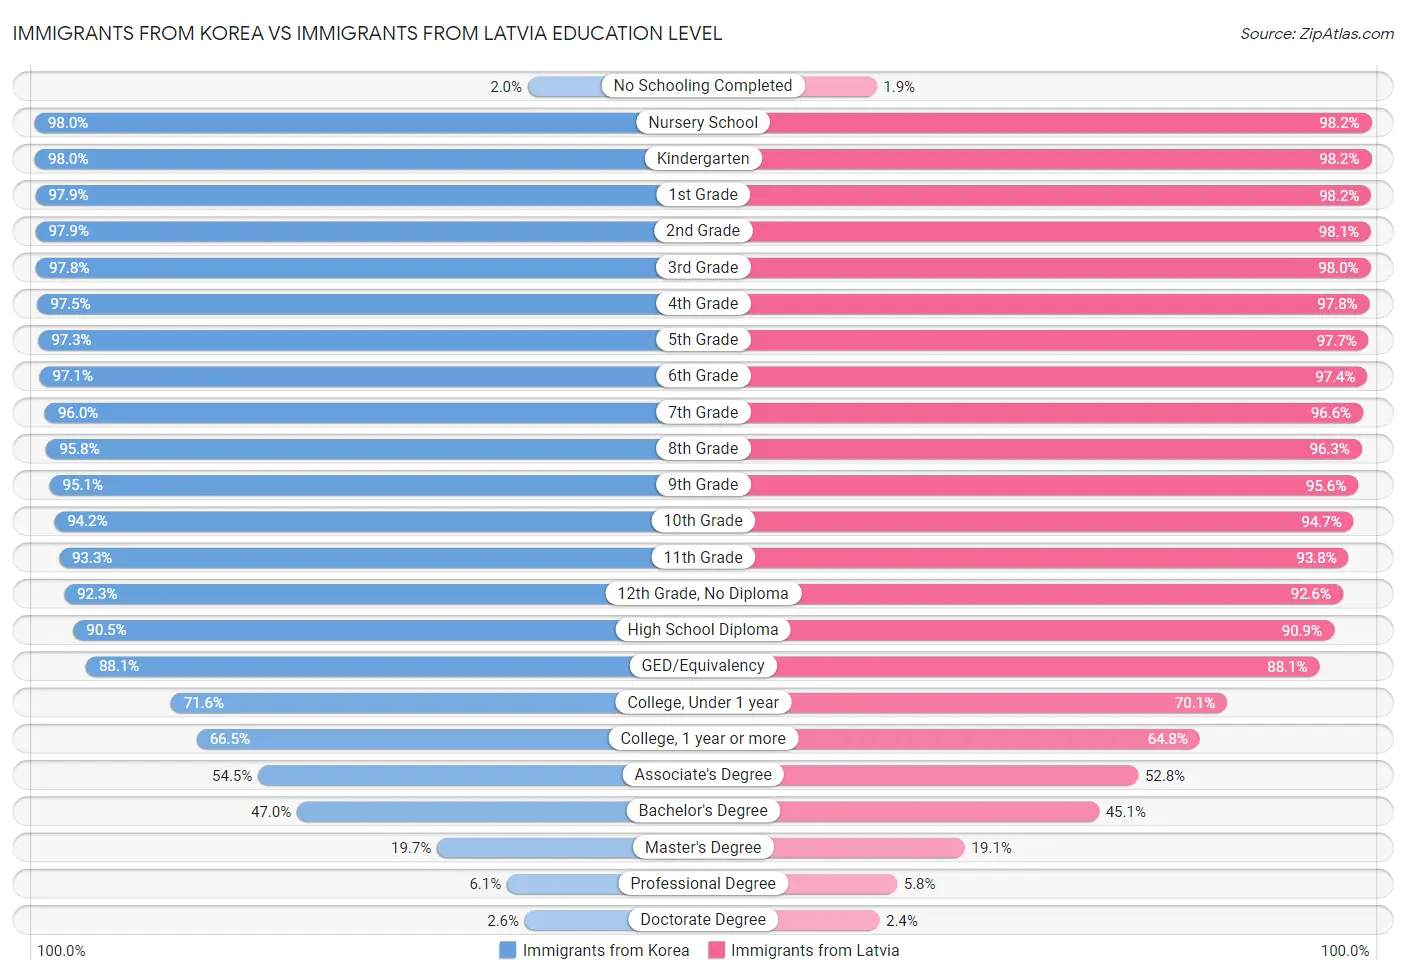 Immigrants from Korea vs Immigrants from Latvia Education Level